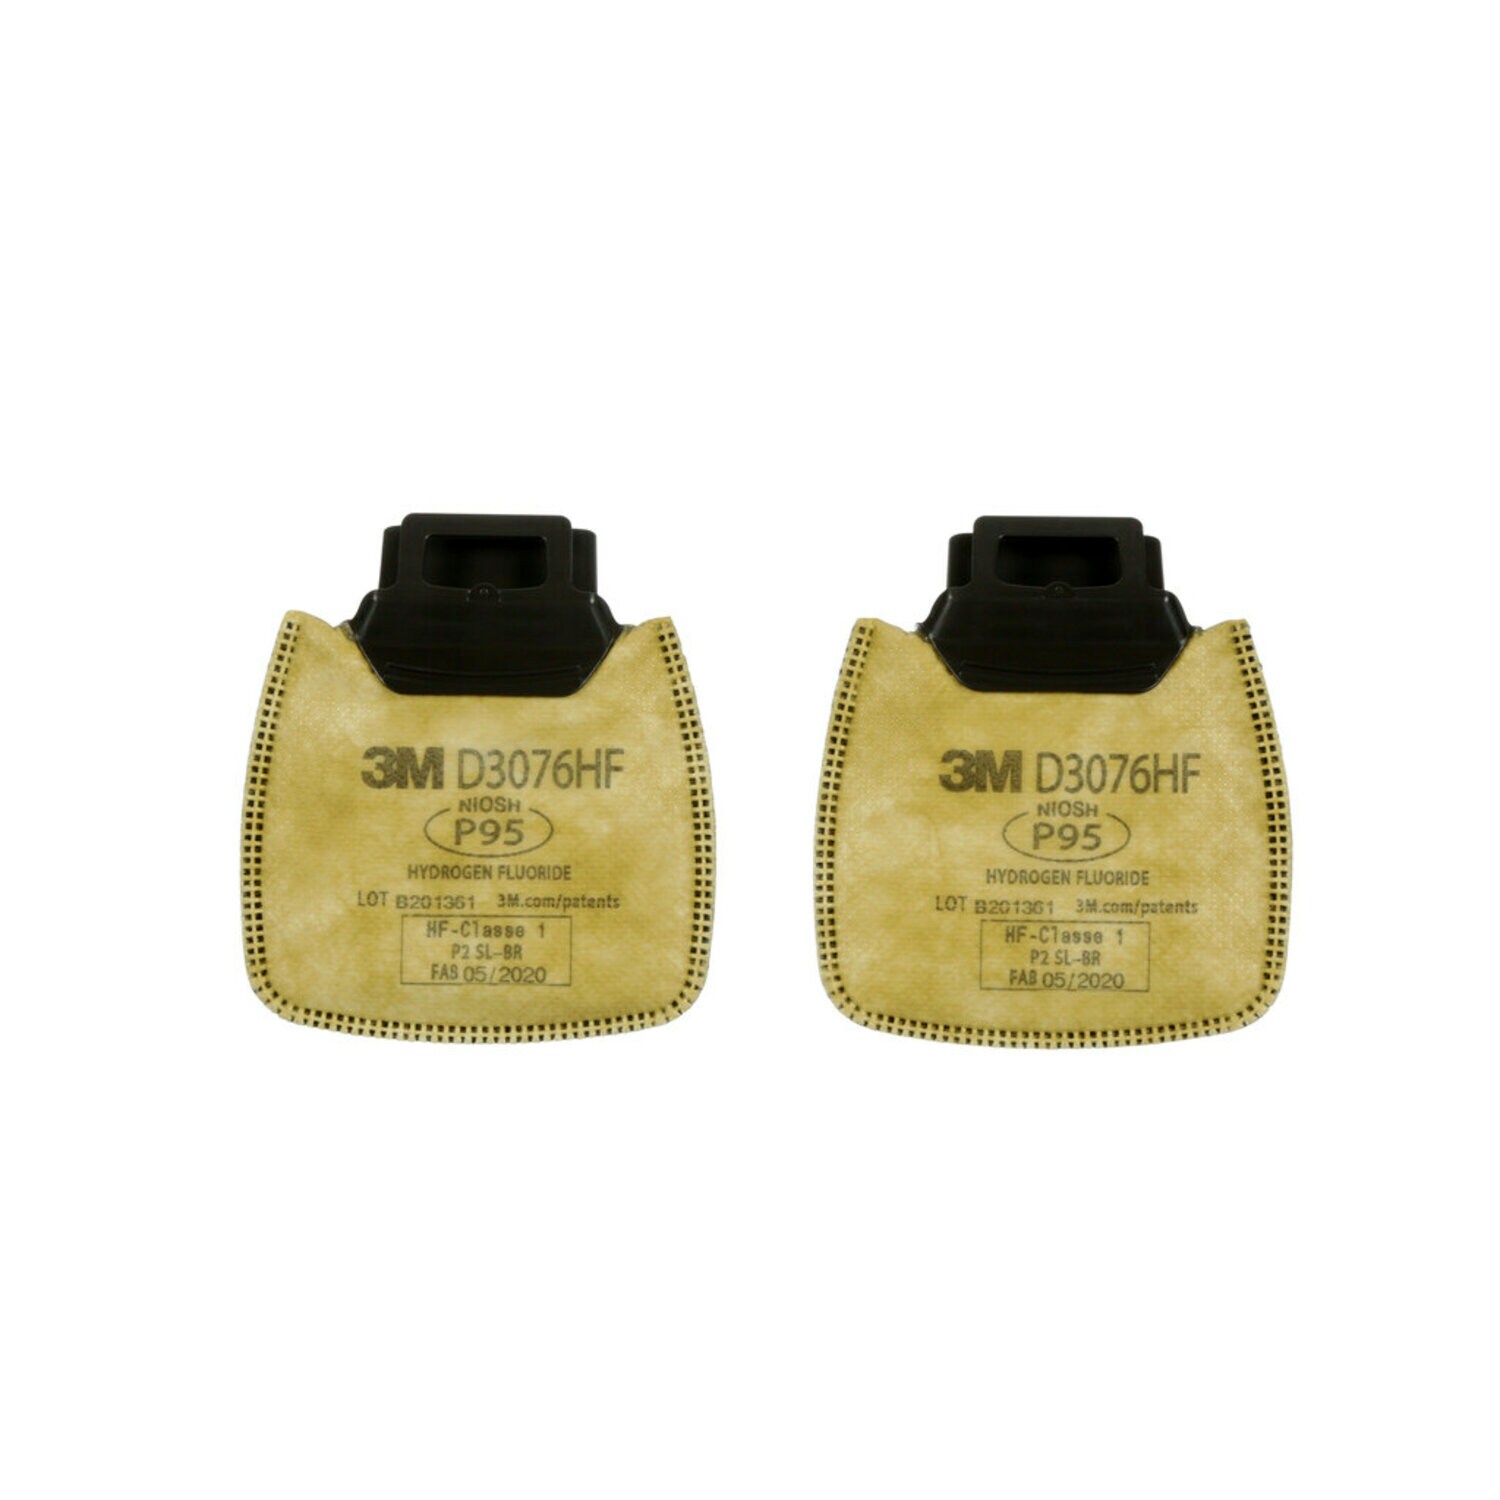 7100213424 - 3M Secure Click Particulate Cartridge P95/Hydrogen Fluoride w/
Nuisance Acid Gas Relief D3076HF, 100 ea/Case